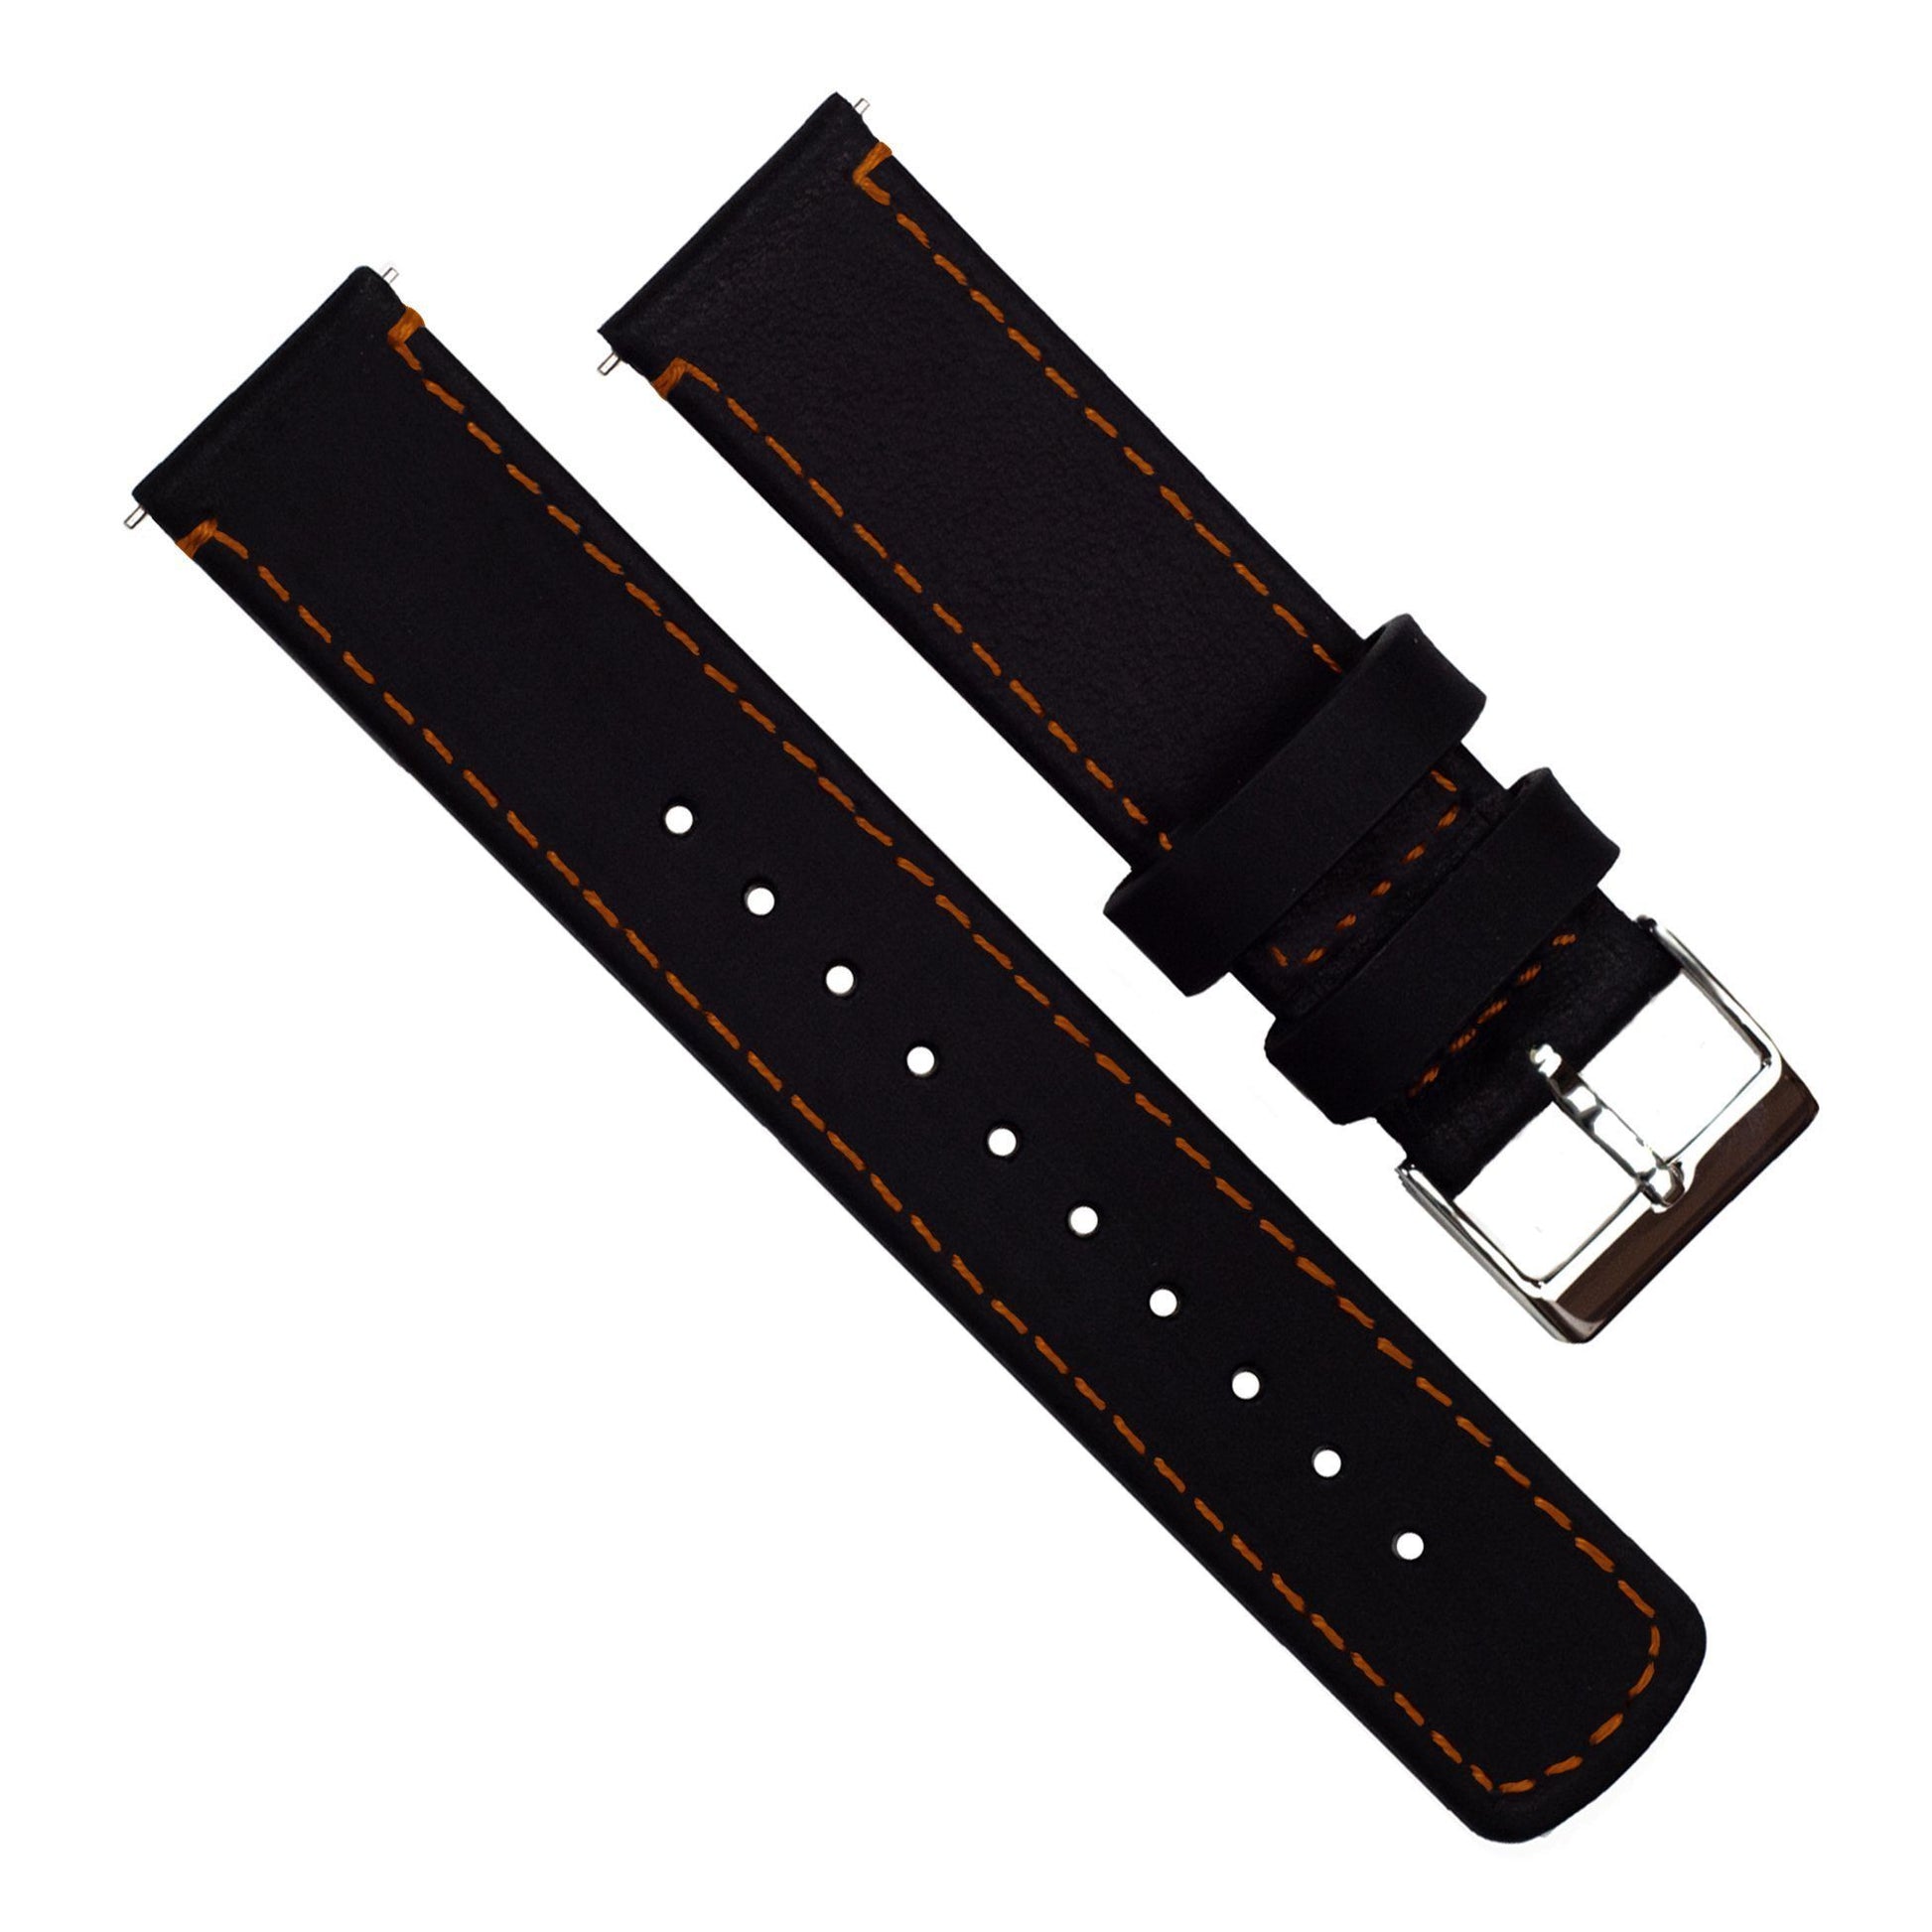 Zenwatch & Zenwatch 2 | Black Leather & Orange Stitching - Barton Watch Bands